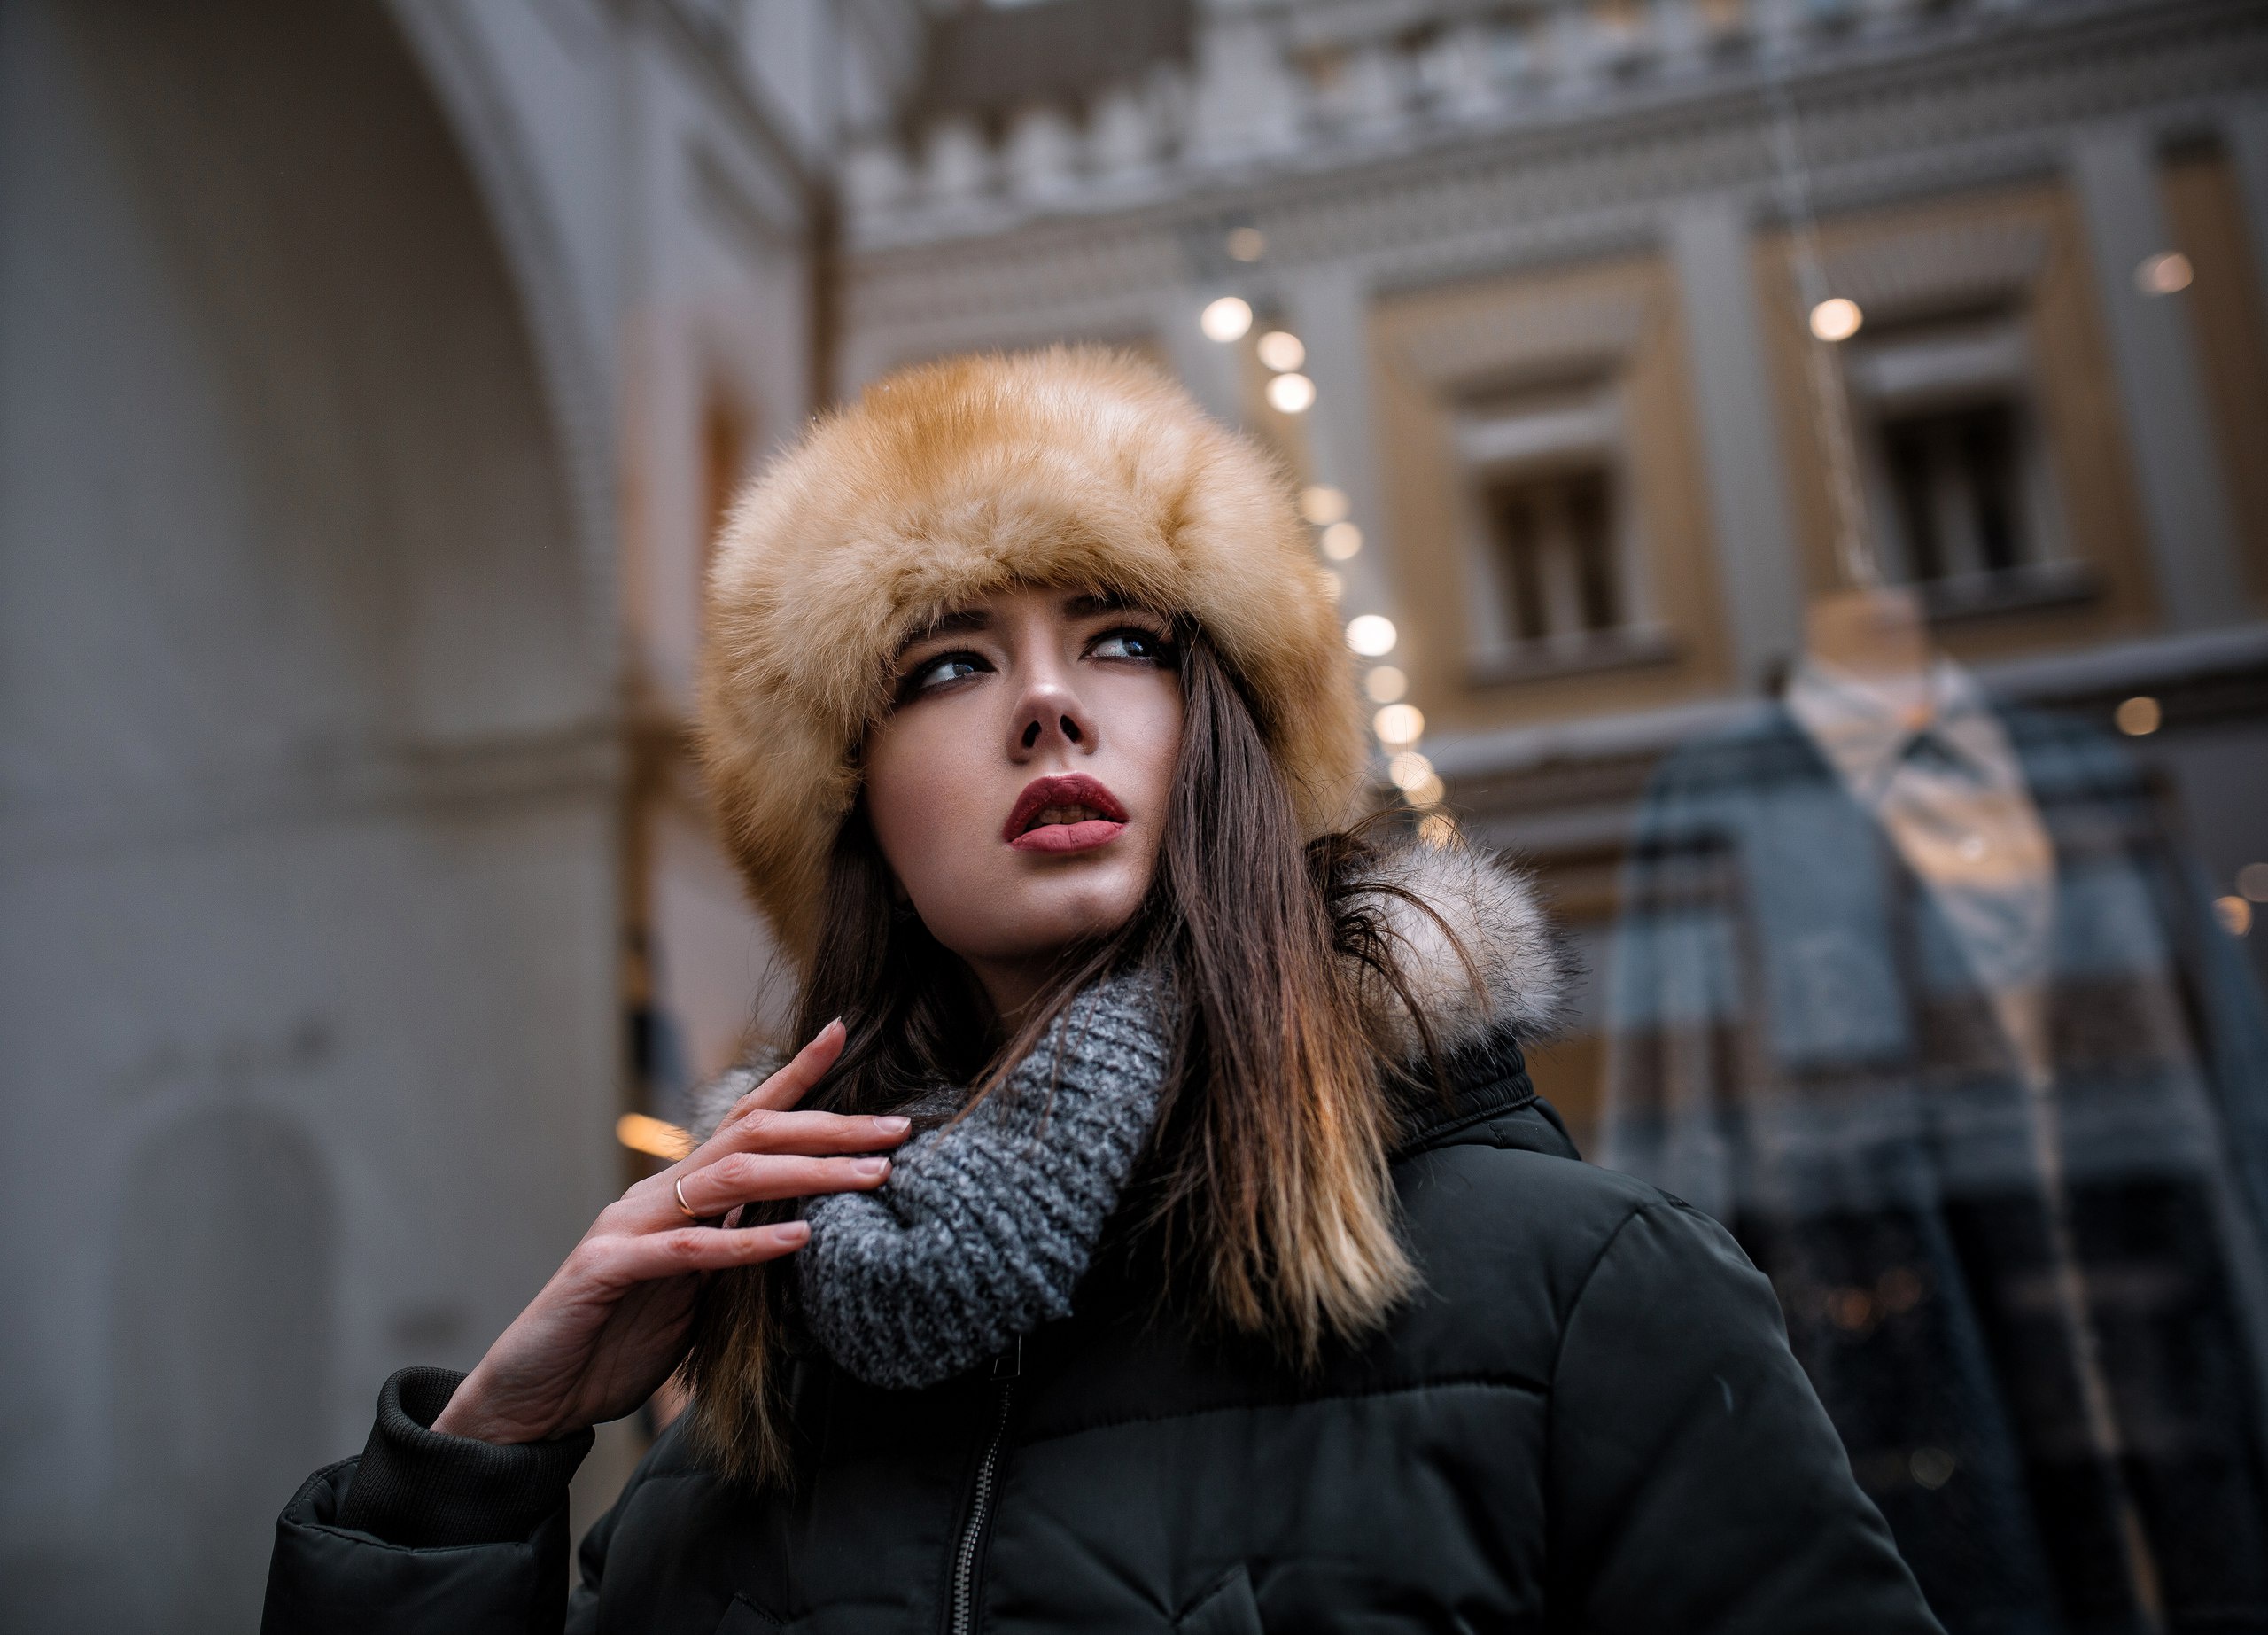 People 2560x1845 urban portrait women outdoors women Disha Shemetova fur cap black jackets touching hair looking away winter